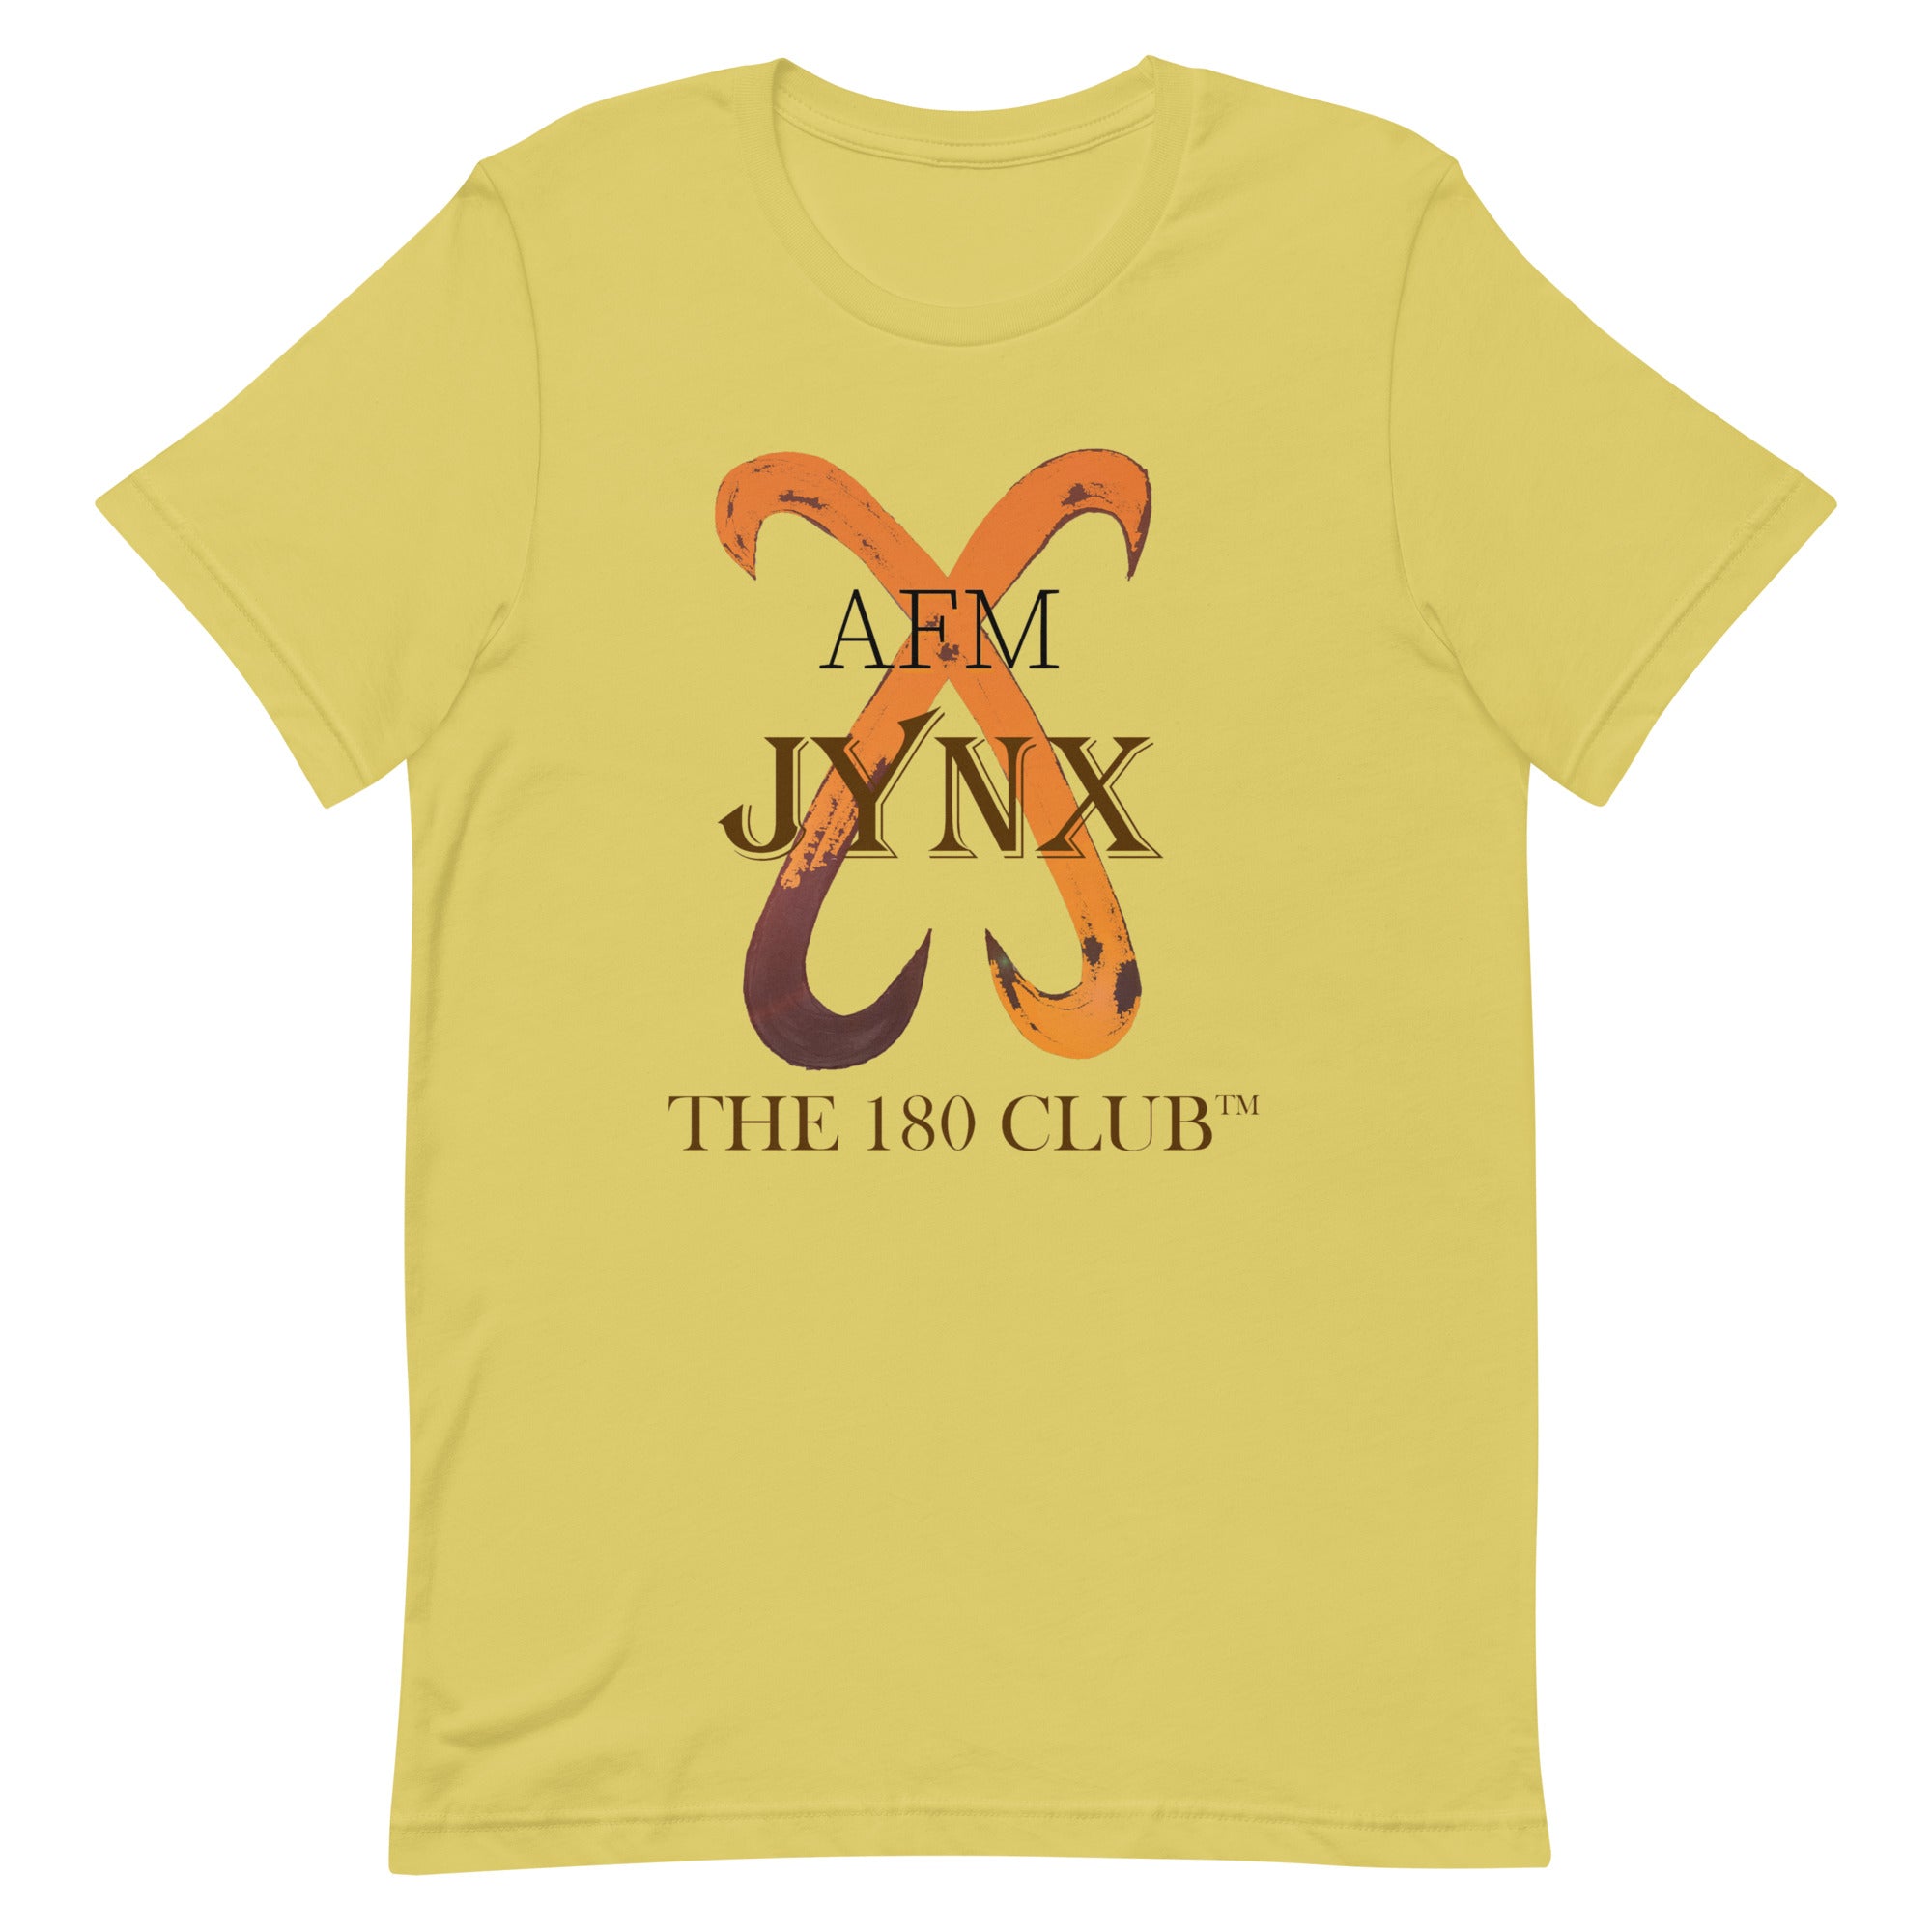 AFM JYNX - Unisex t-shirt